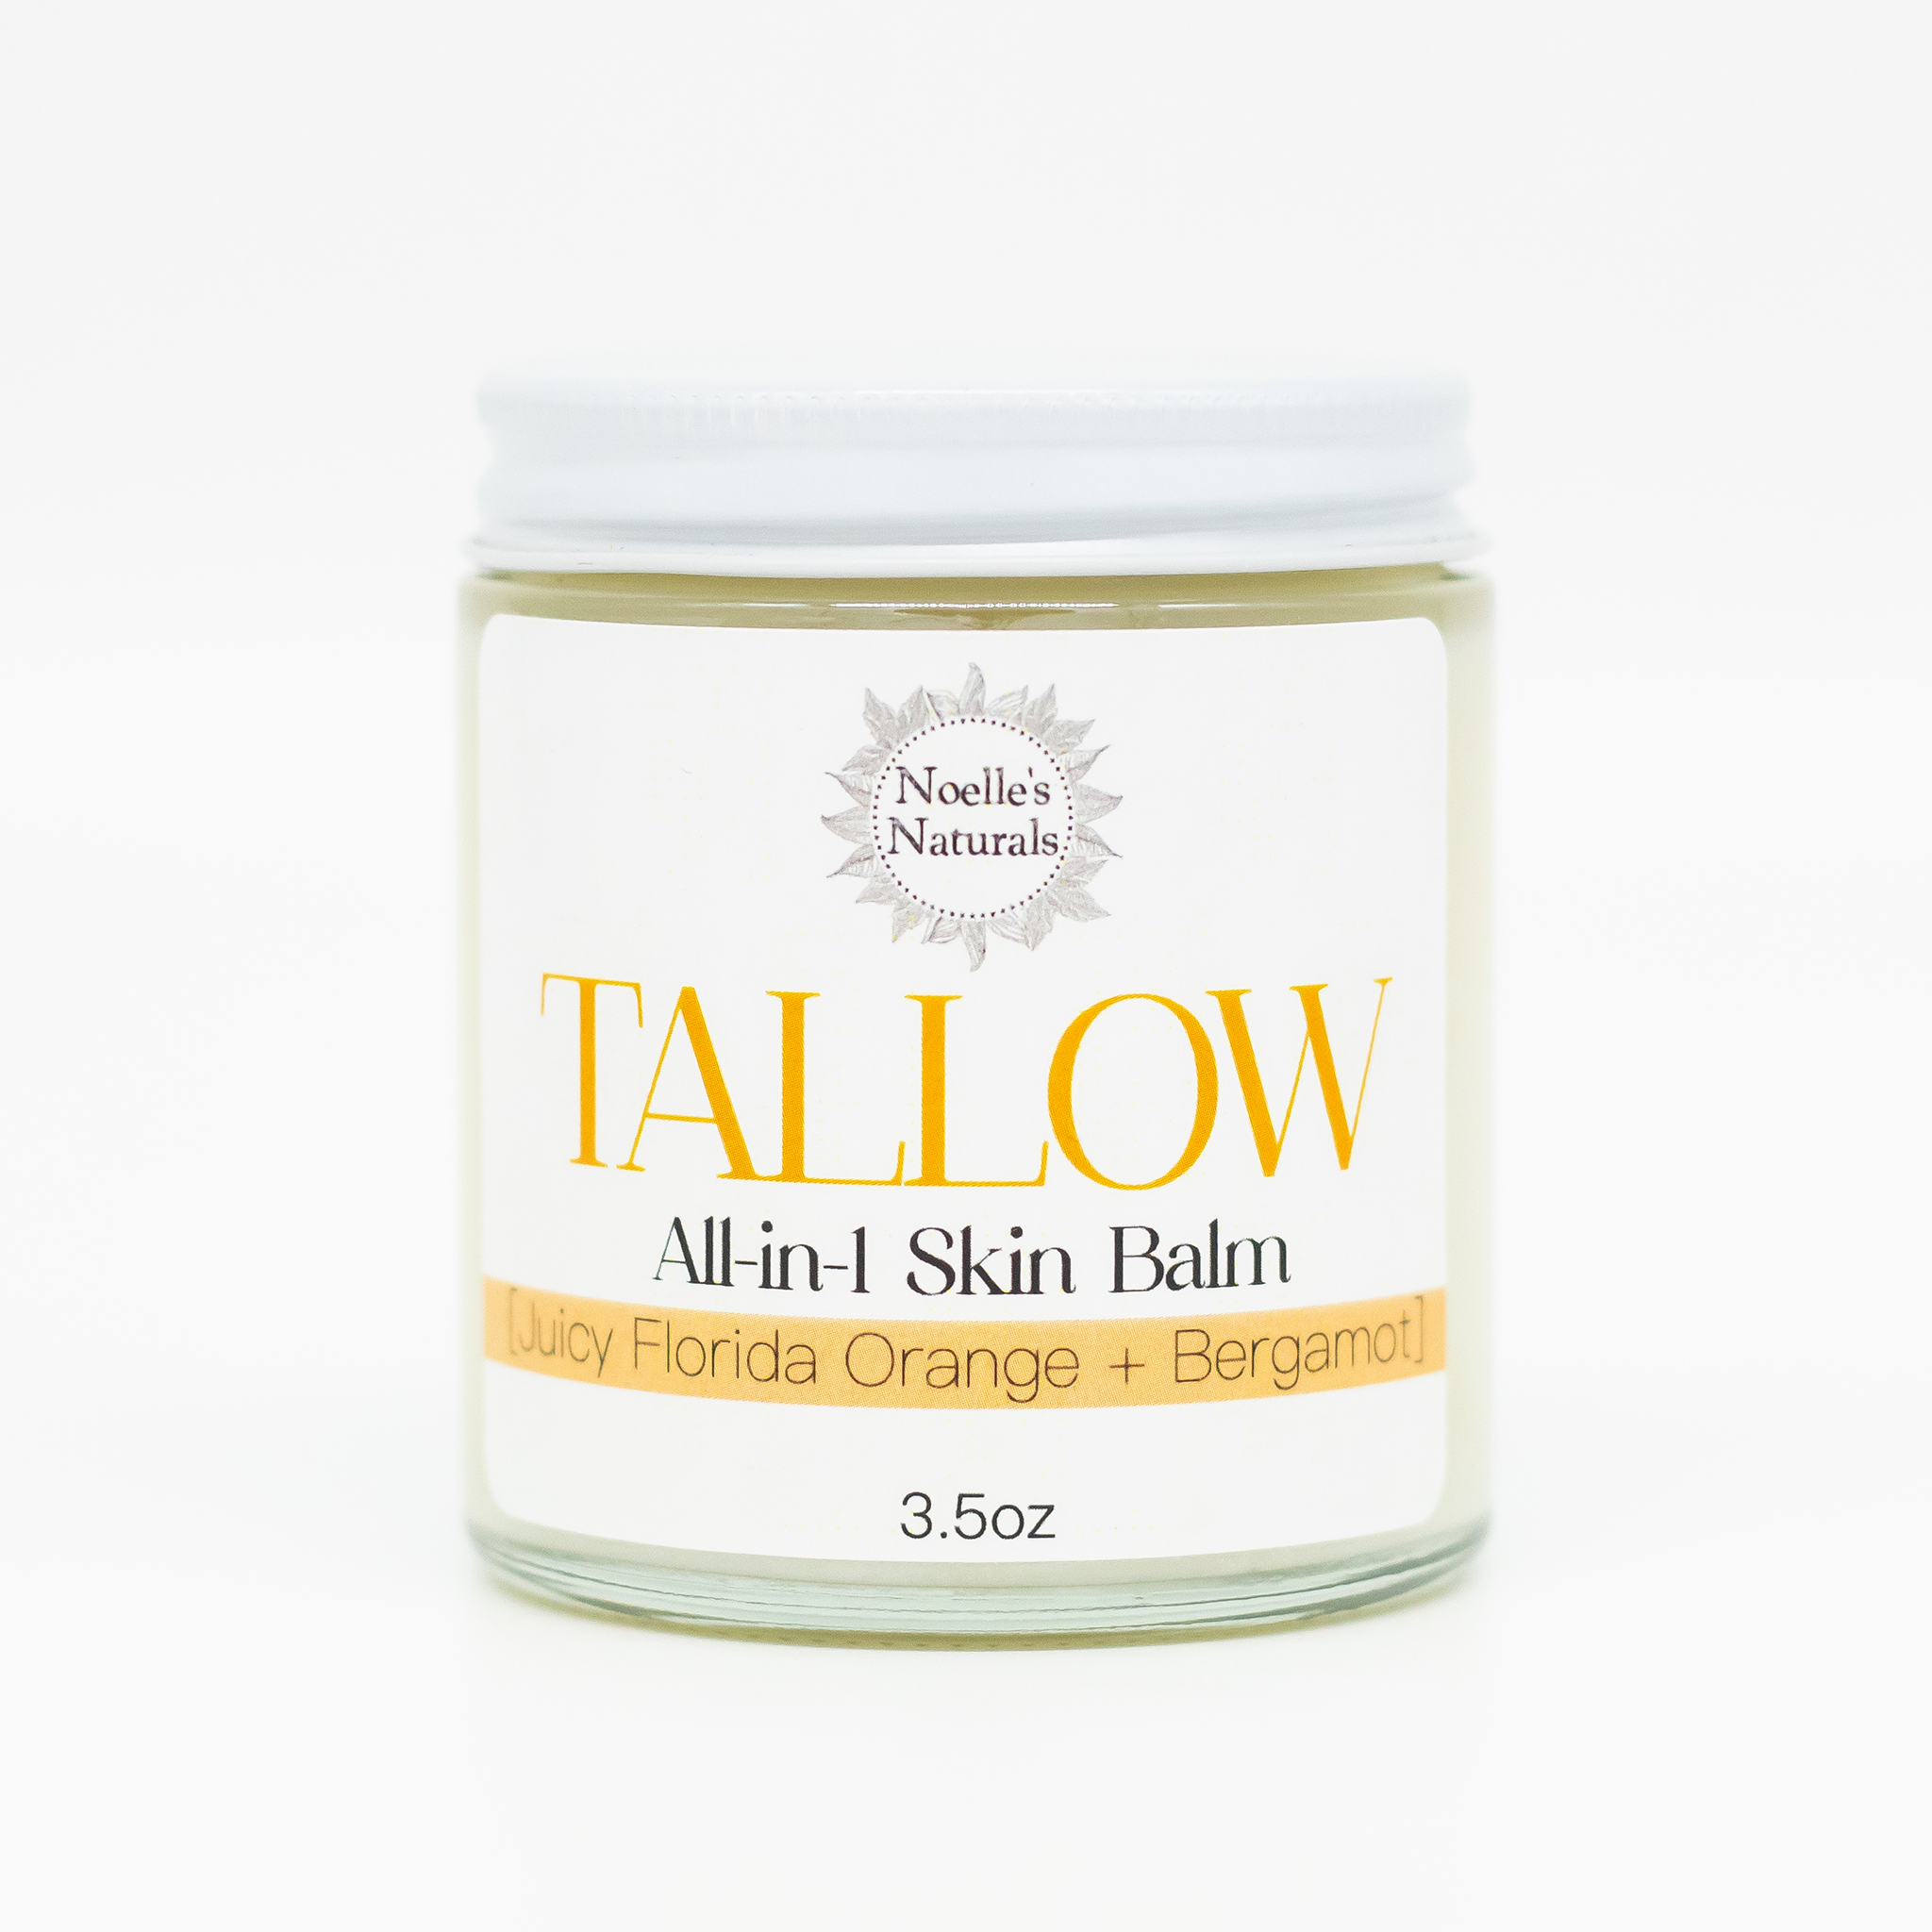 Organic Tallow Balm - Juicy Florida Orange + Bergamot - 3.5oz